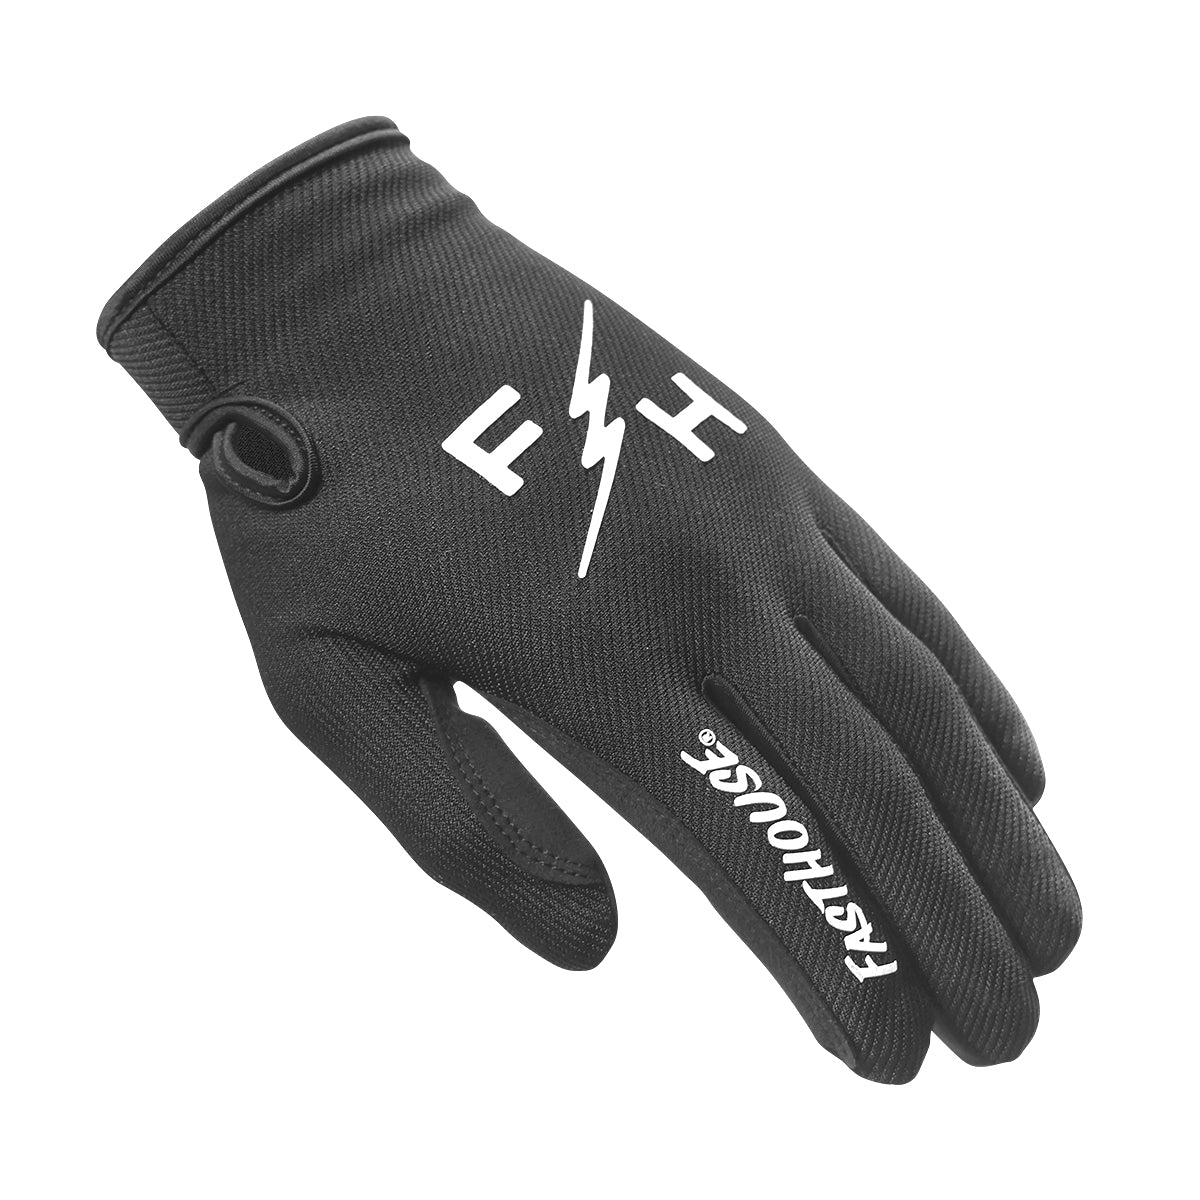 Carbon Eternal Glove - Black